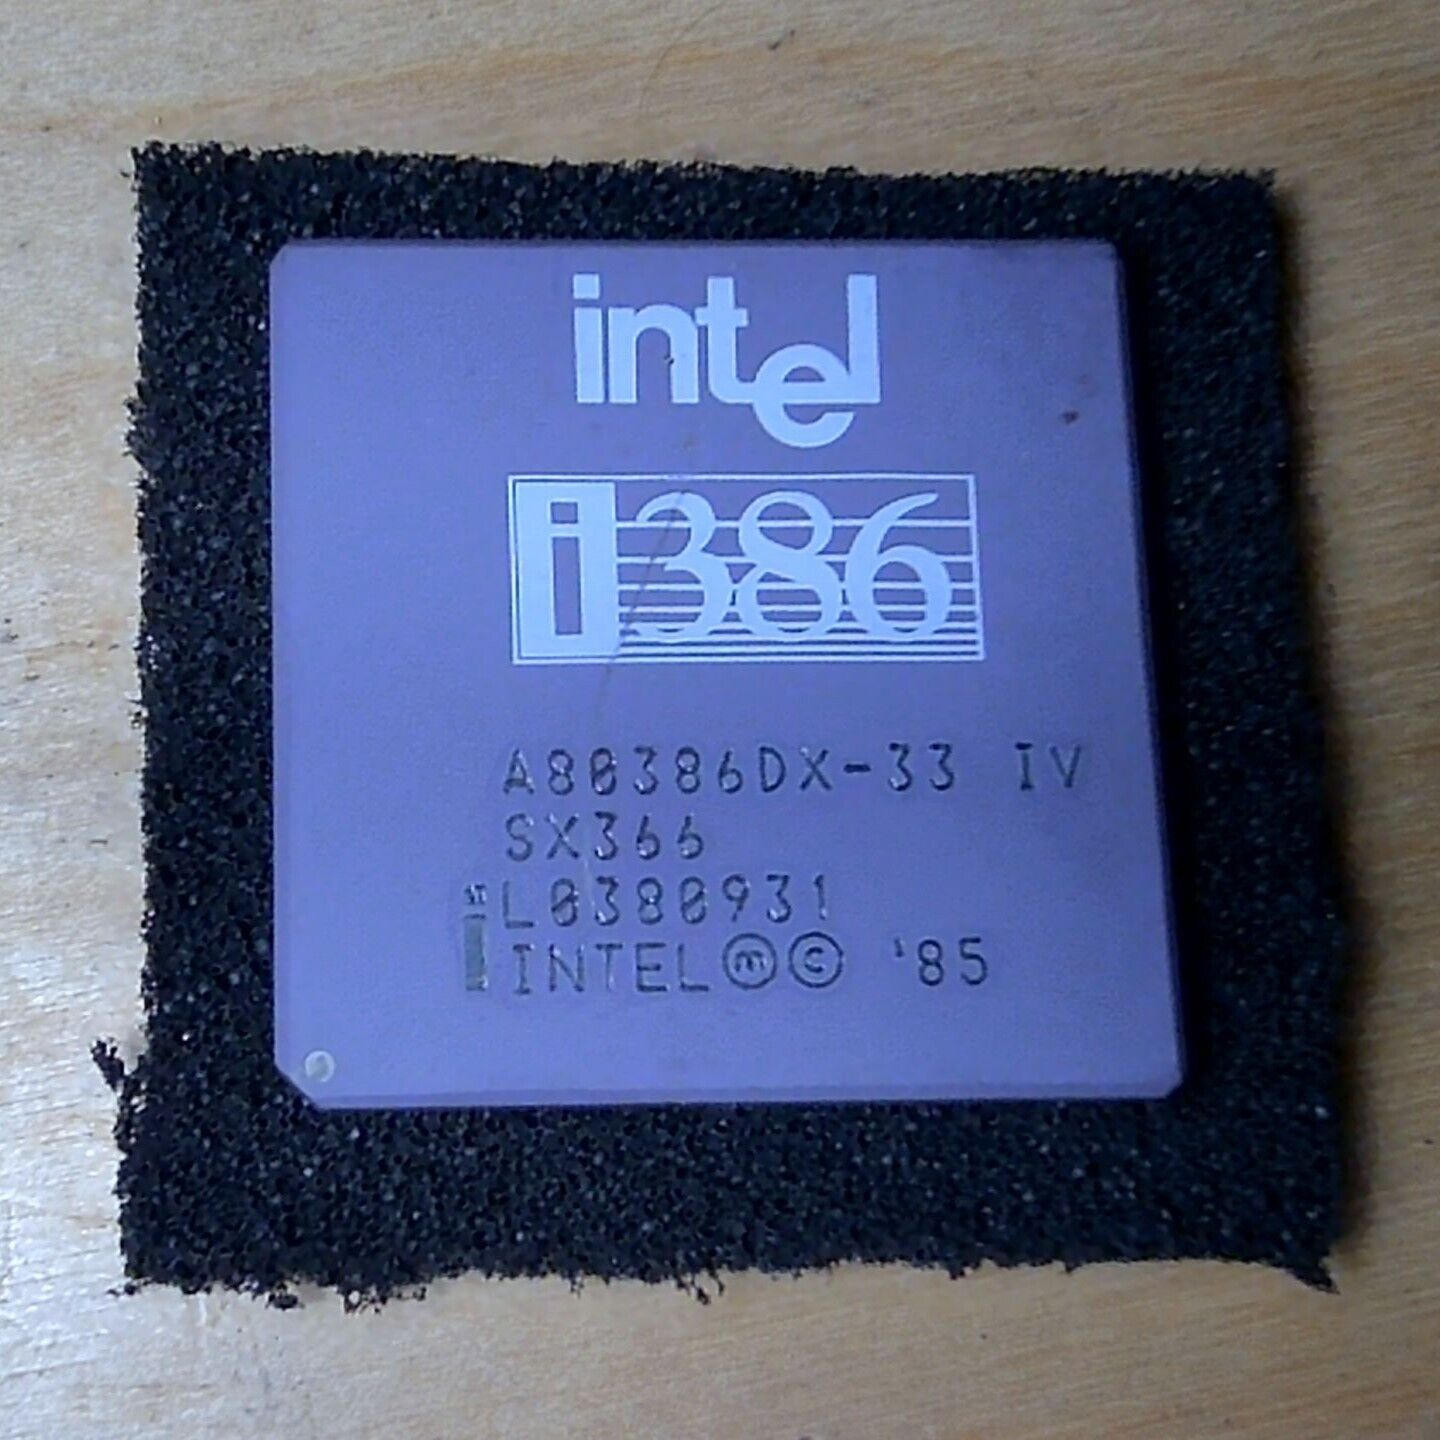 Intel i386 A80386DX-33 IV SX366 33MHz vintage CPU GOLD